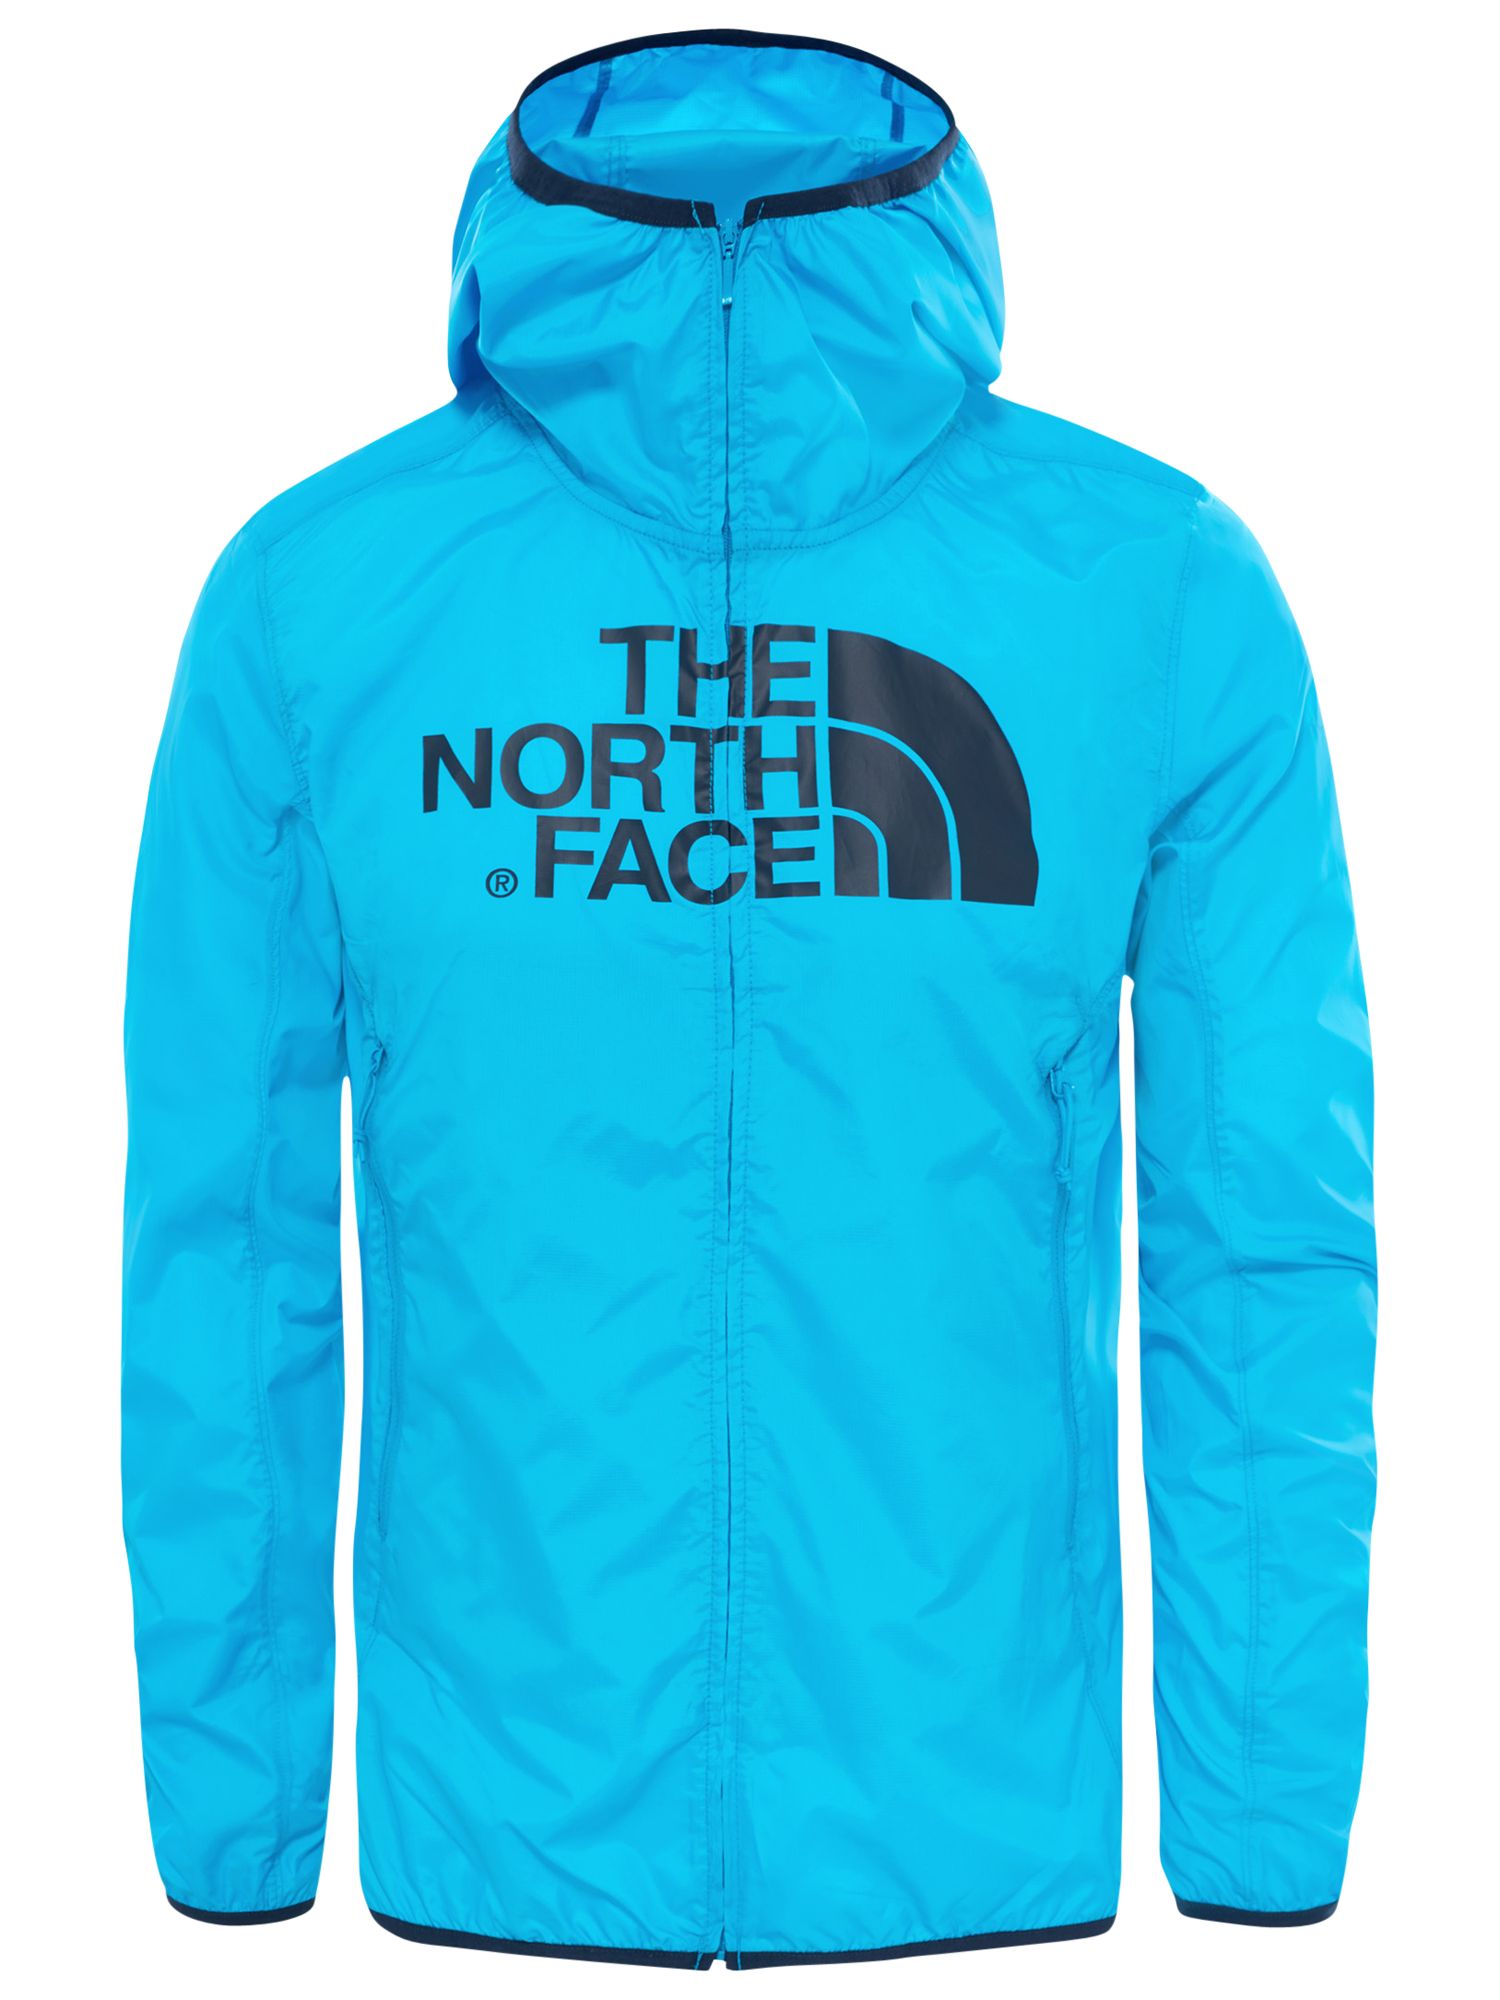 The North Face Drew Peak WindWall Men's Jacket, Blue, L